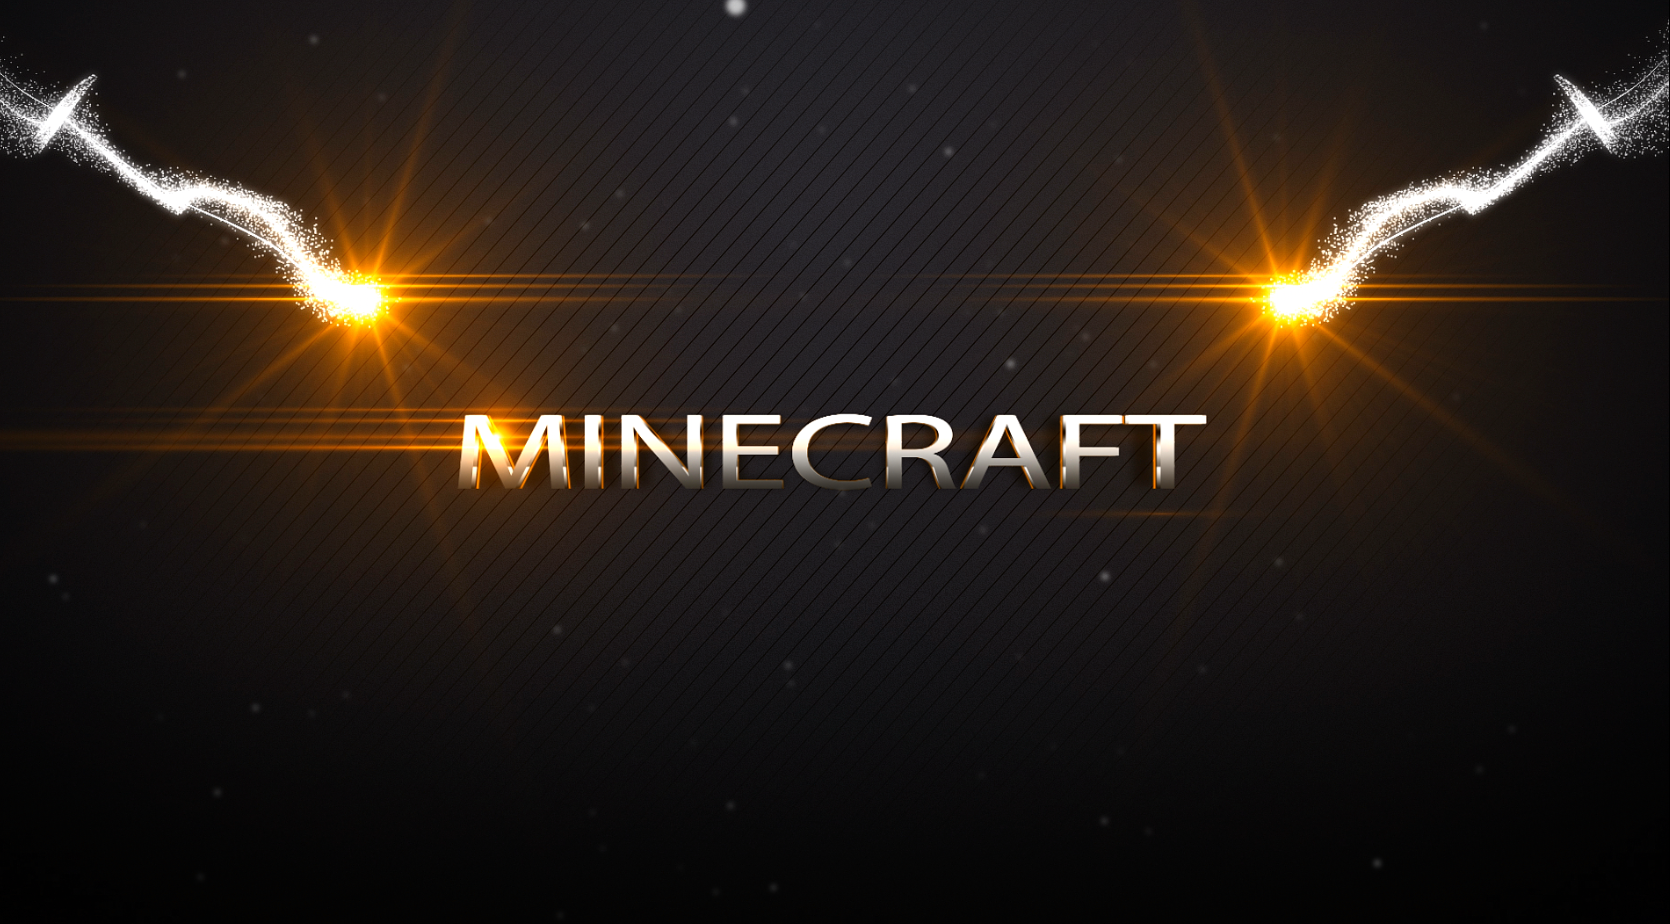 1.7.10ߡ汦Minecraft Capp Pokmon汦3Ϸ_ҵ̳